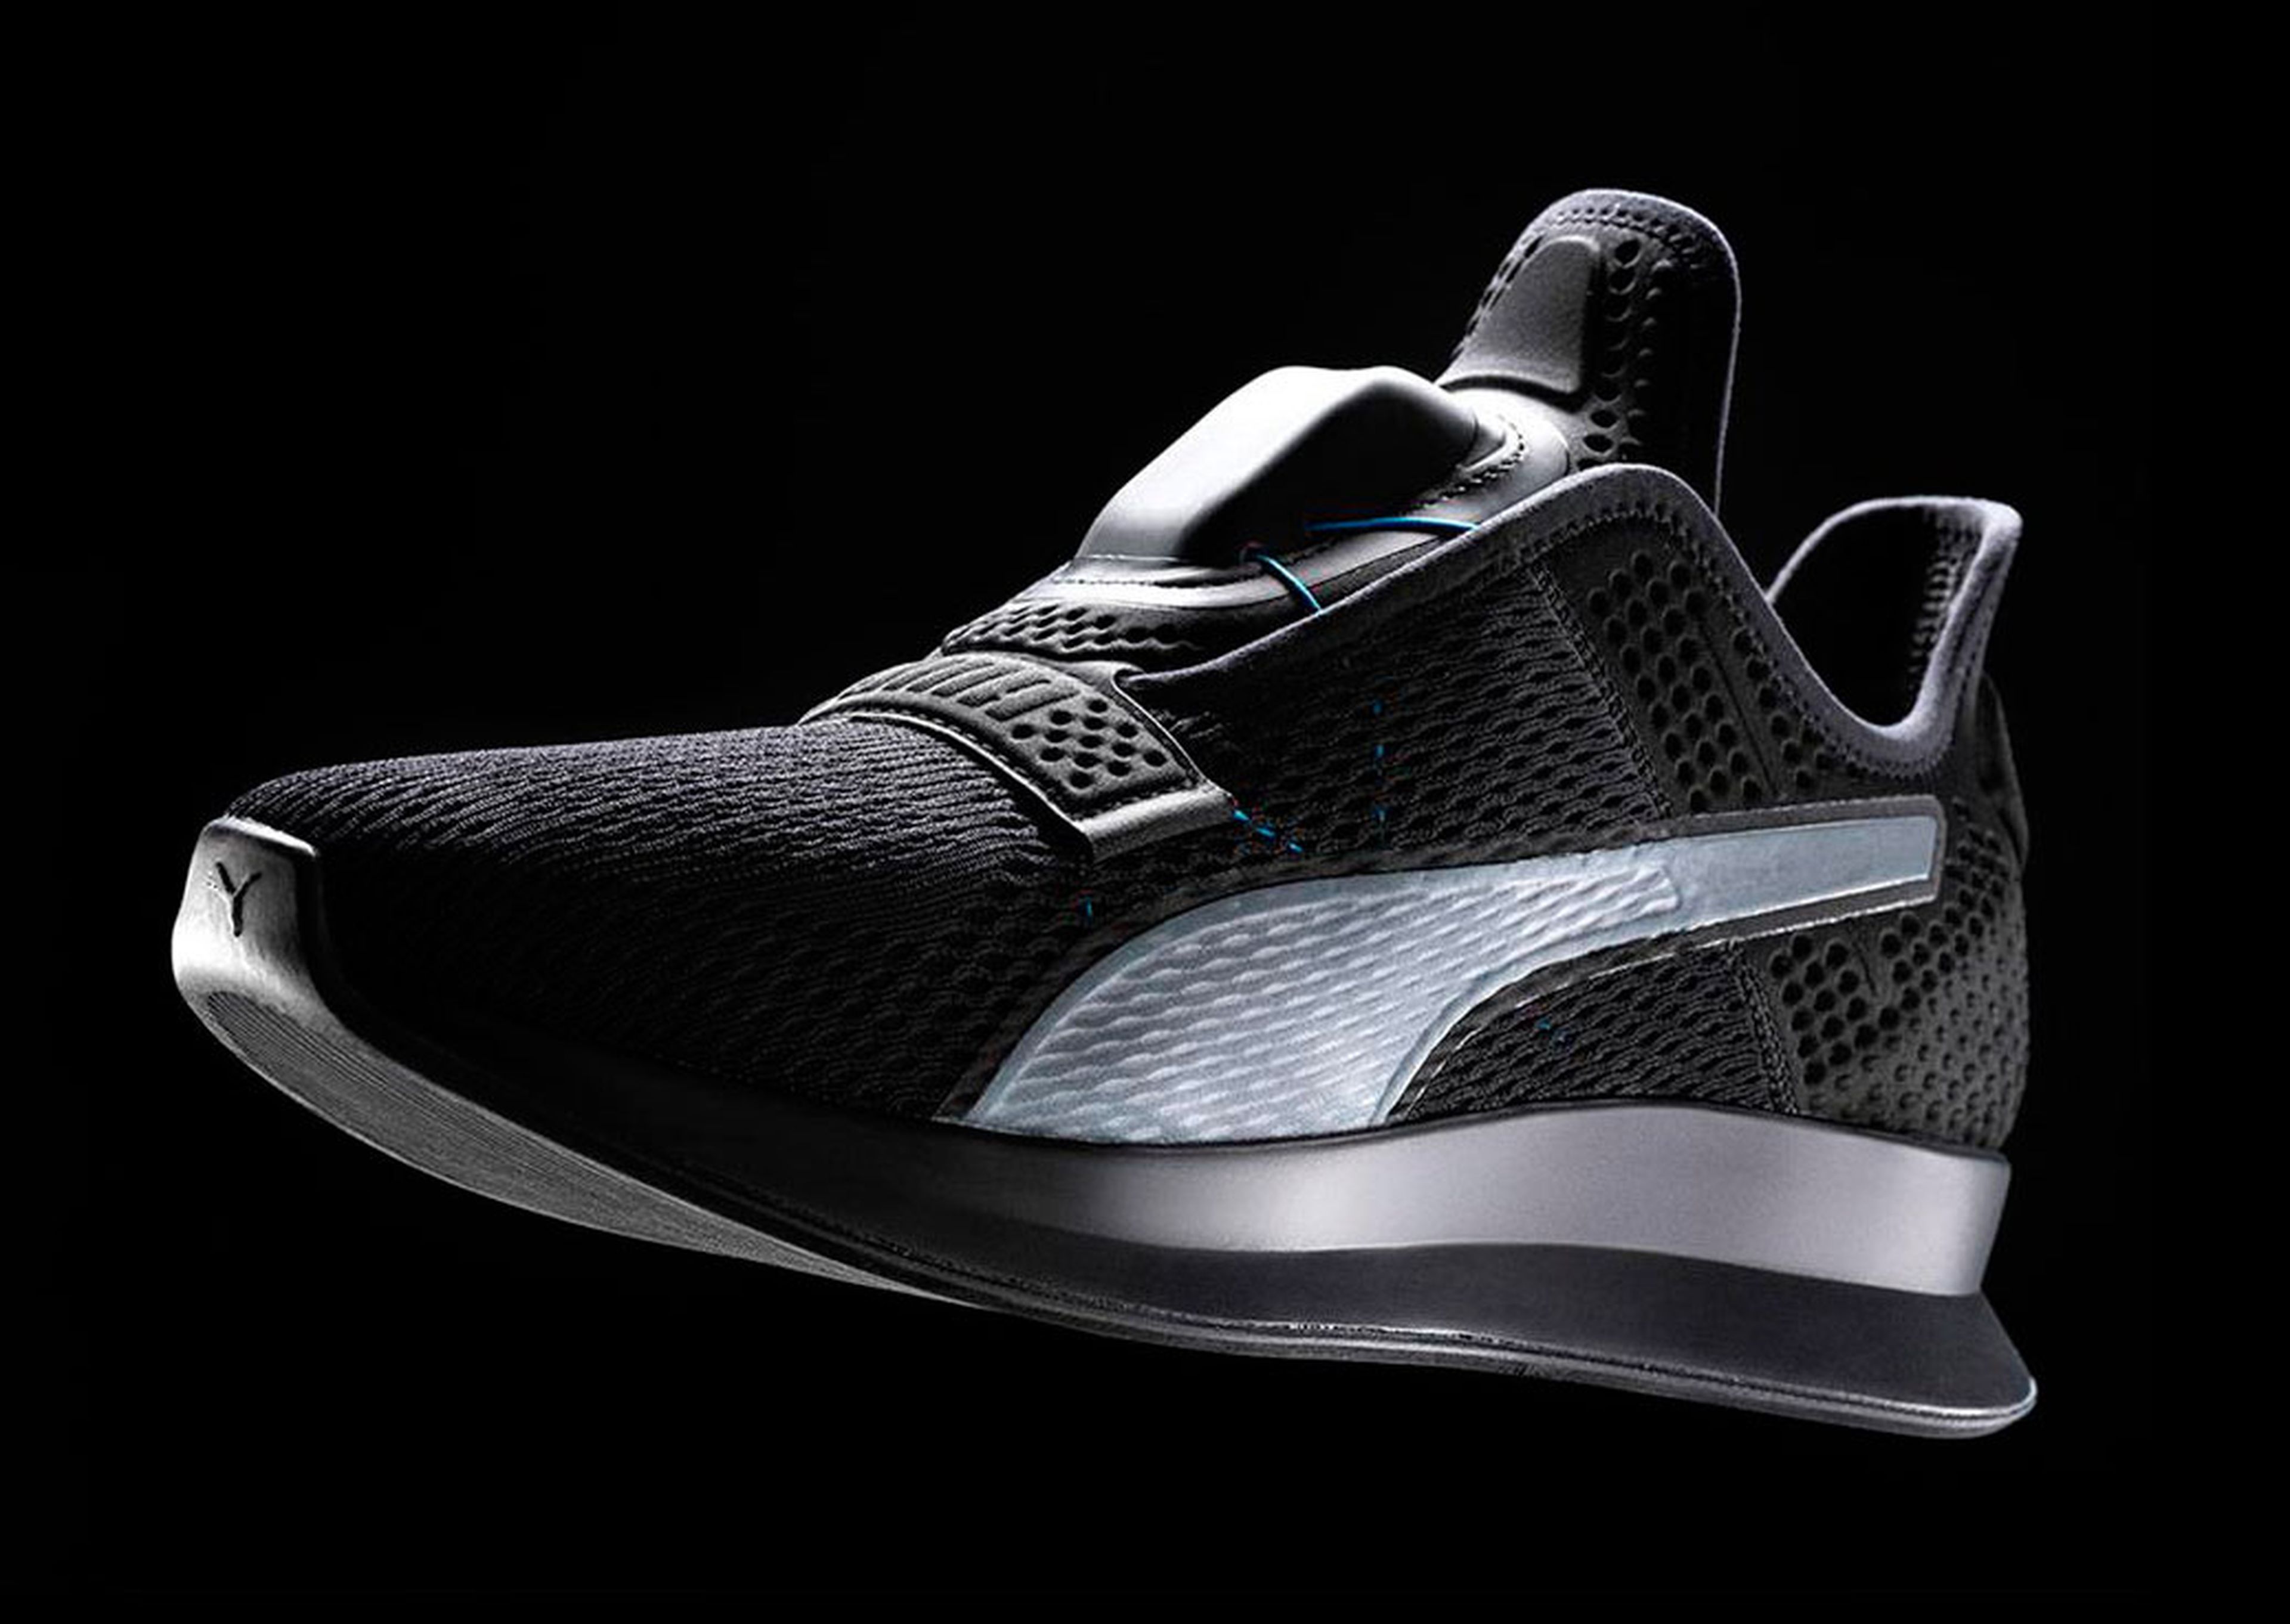 Puma planta cara a Nike con propias zapatillas inteligentes | Computer Hoy